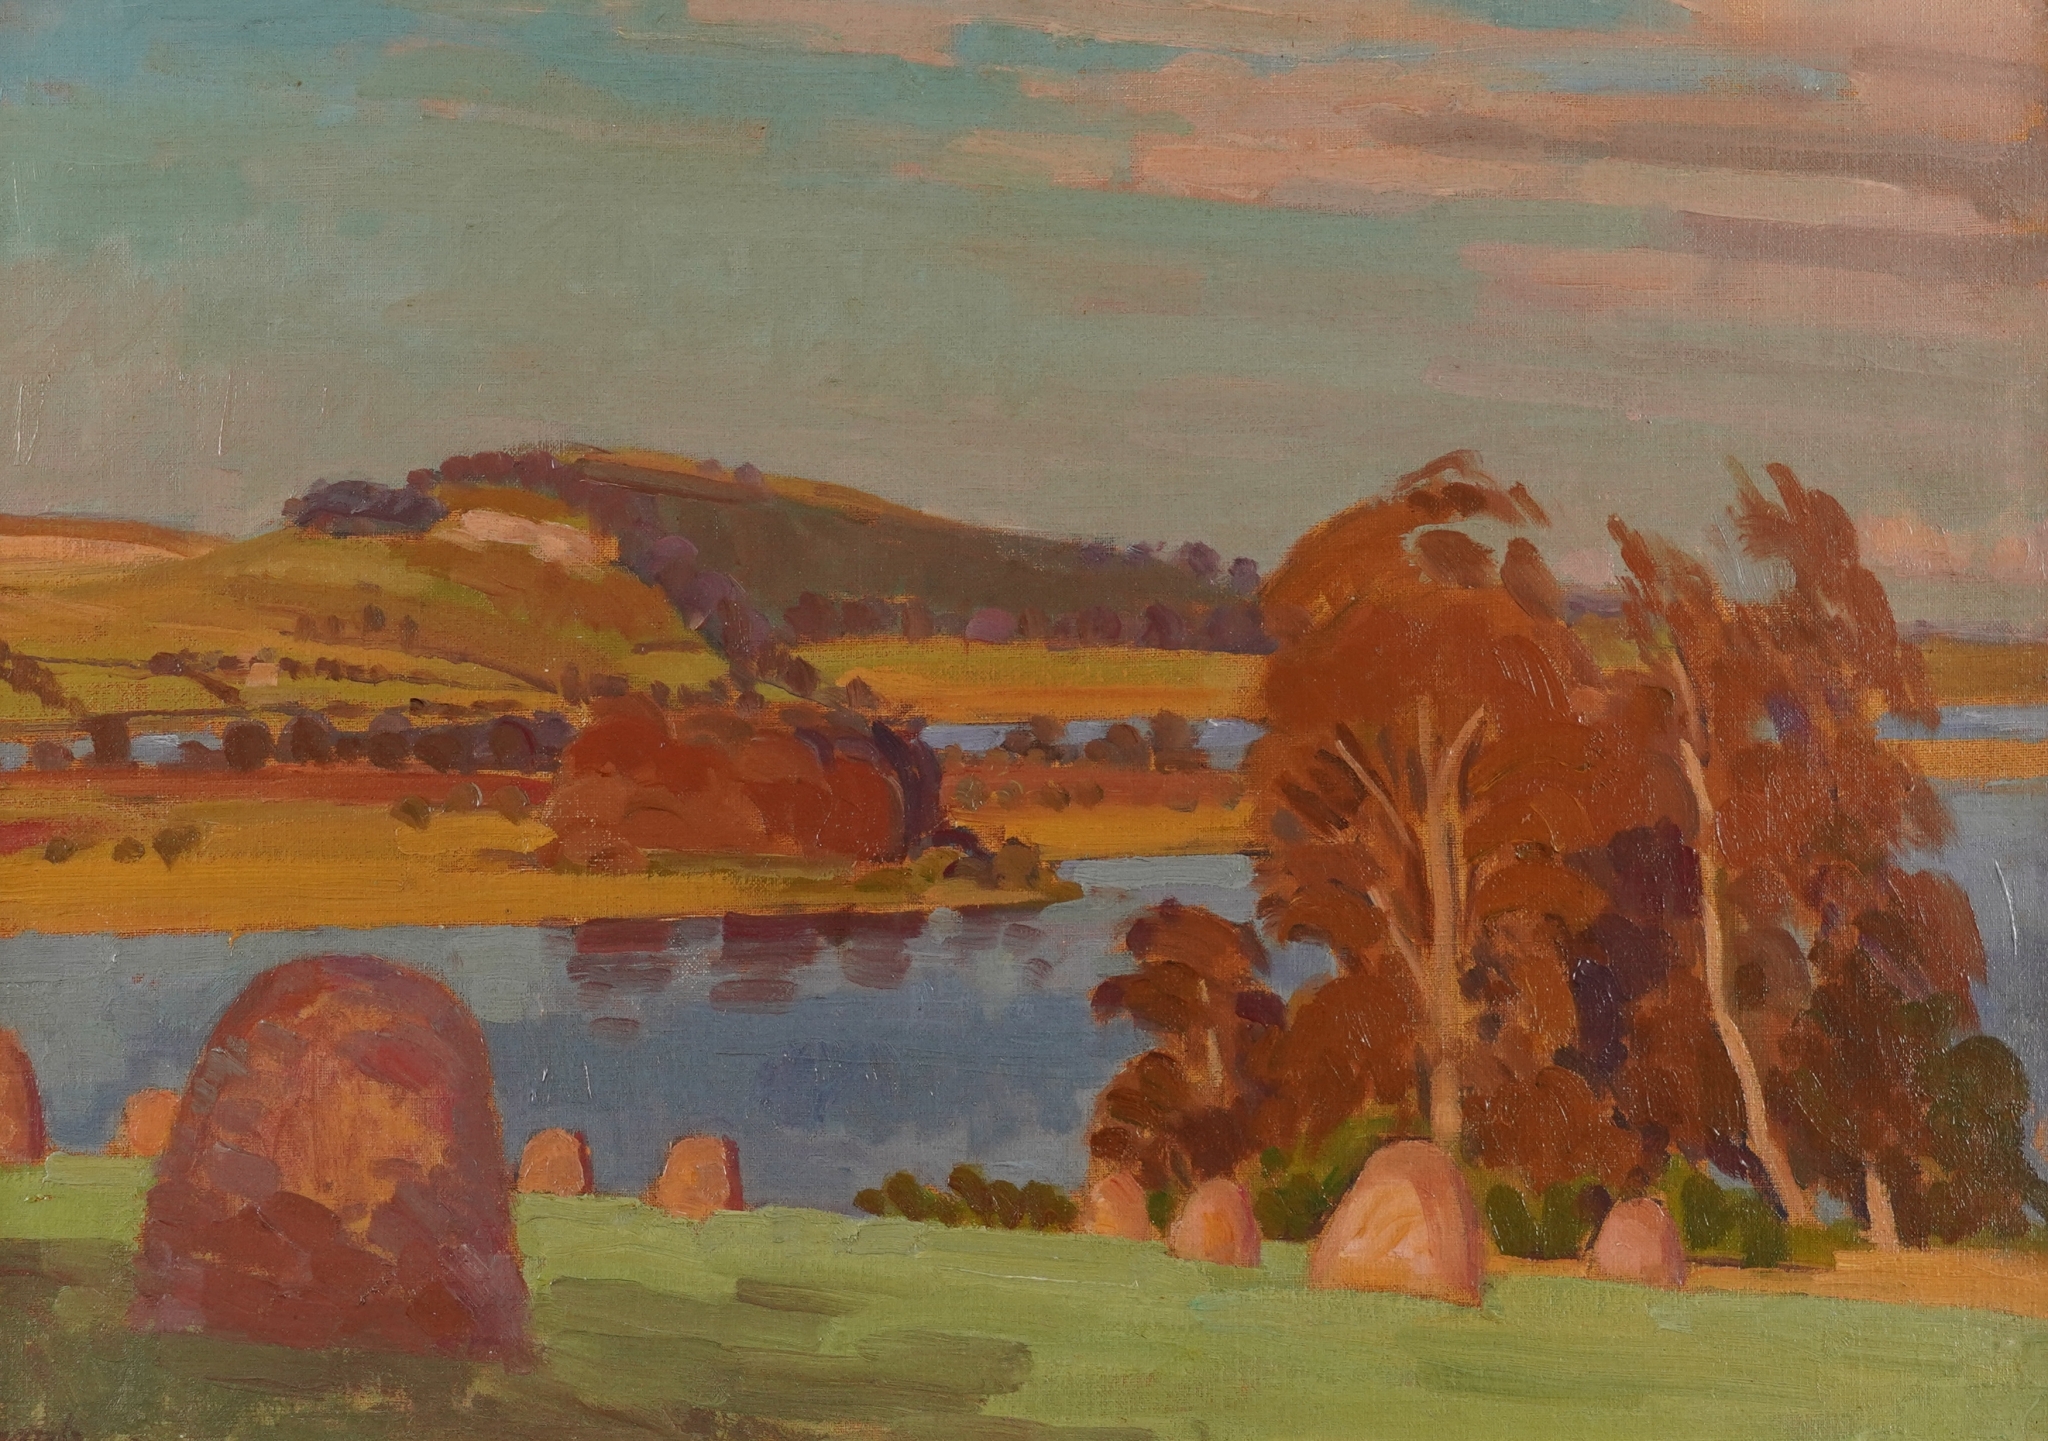 HENRY LAMB (BRITISH, 1883-1960) Loch Lane, County Meath, Ireland